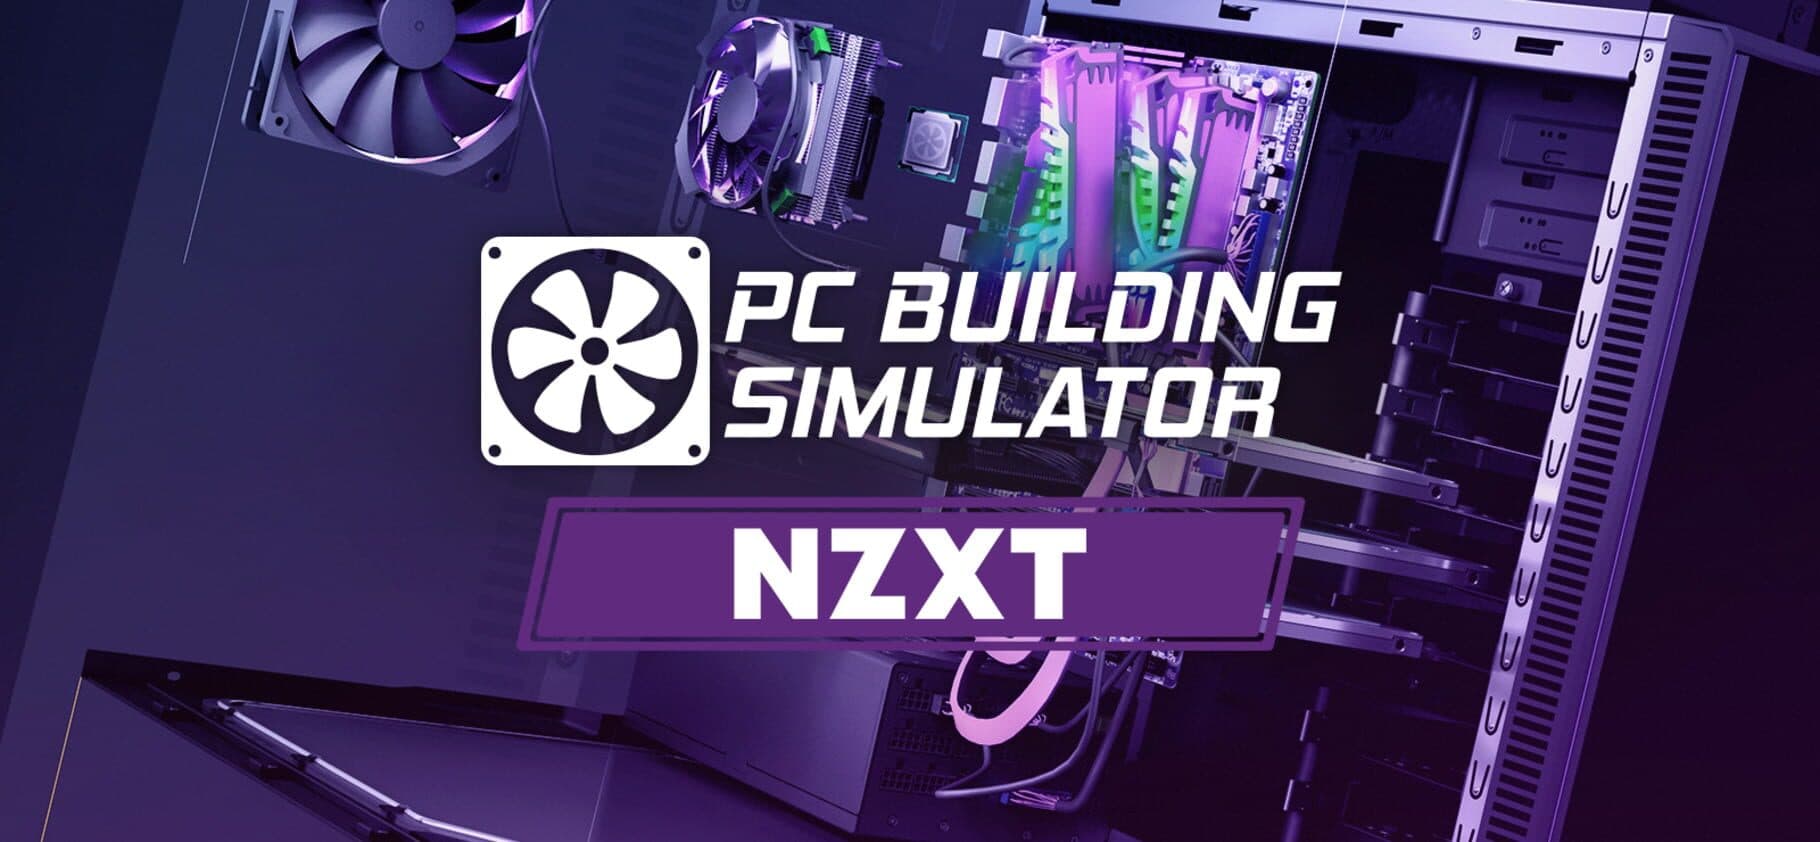 PC Building Simulator: Nzxt Workshop Image